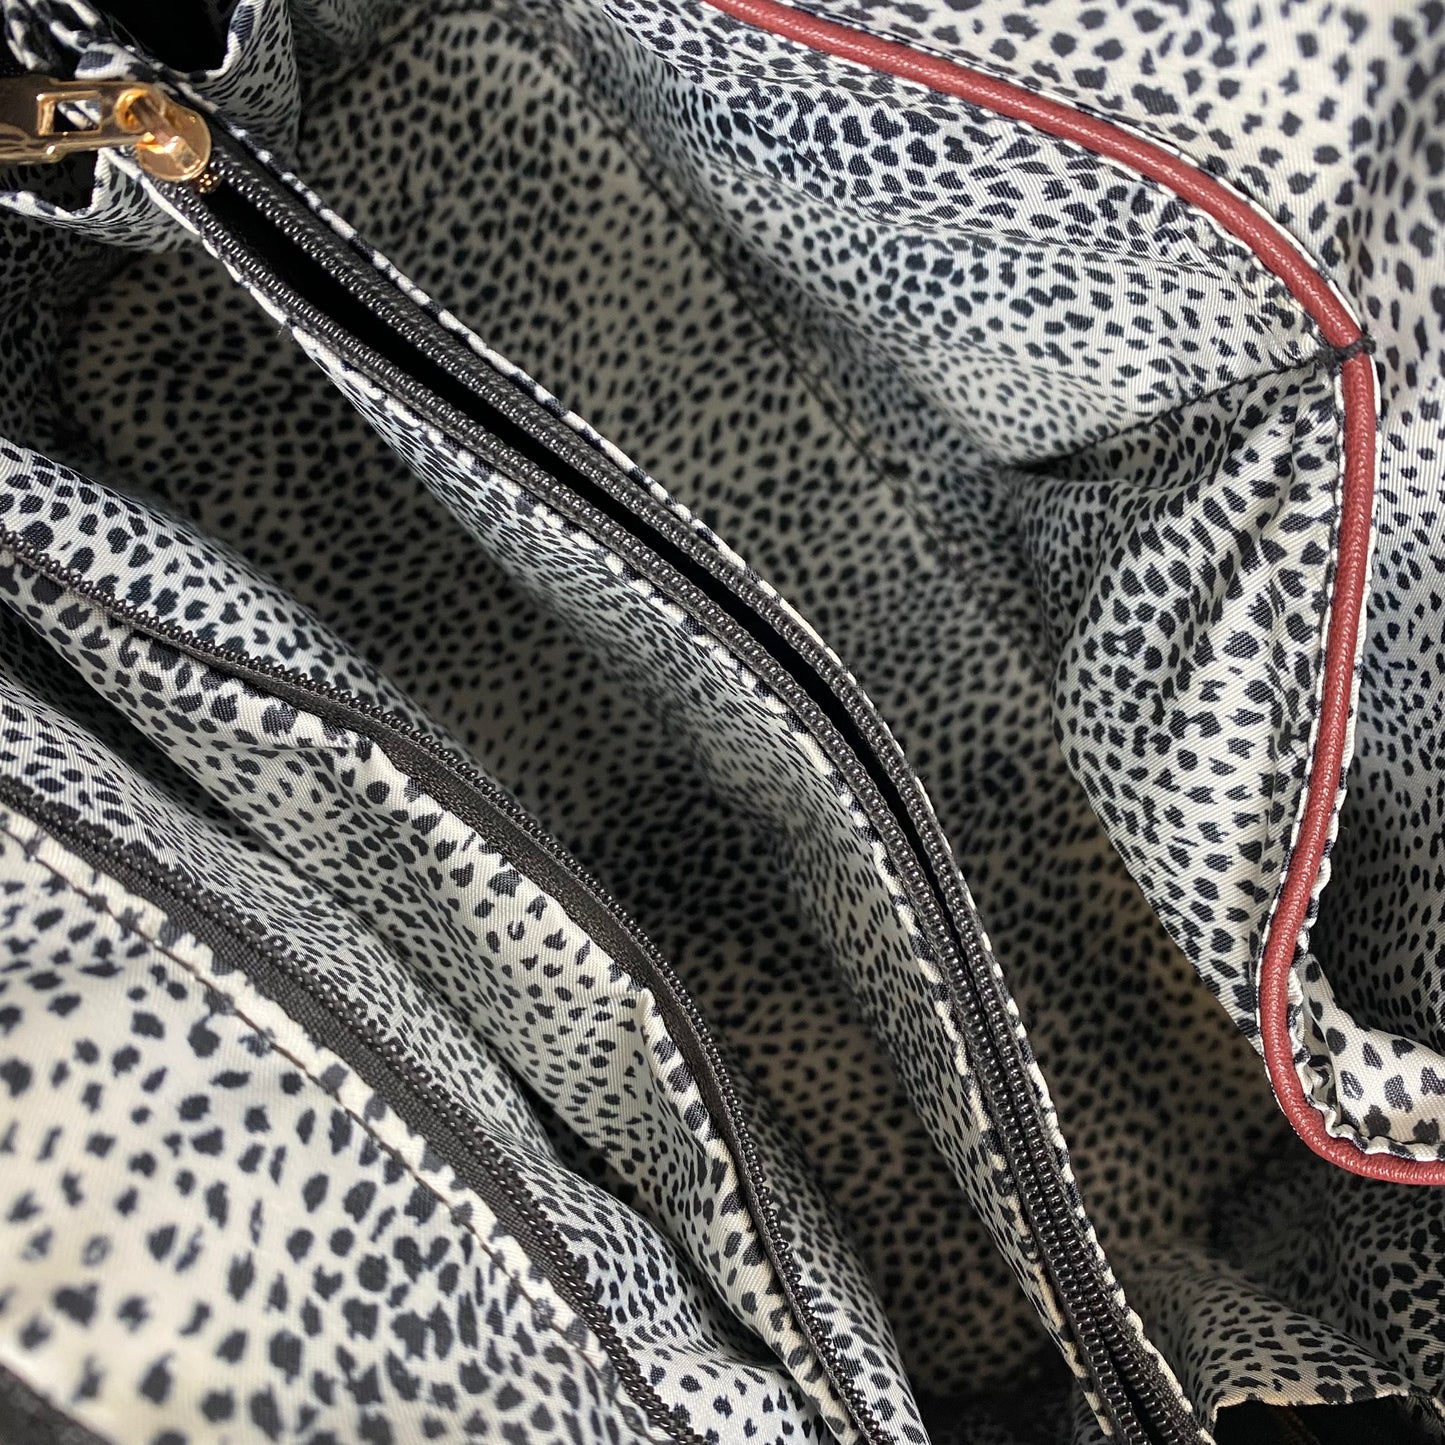 Handbag By Madison West  Size: Medium